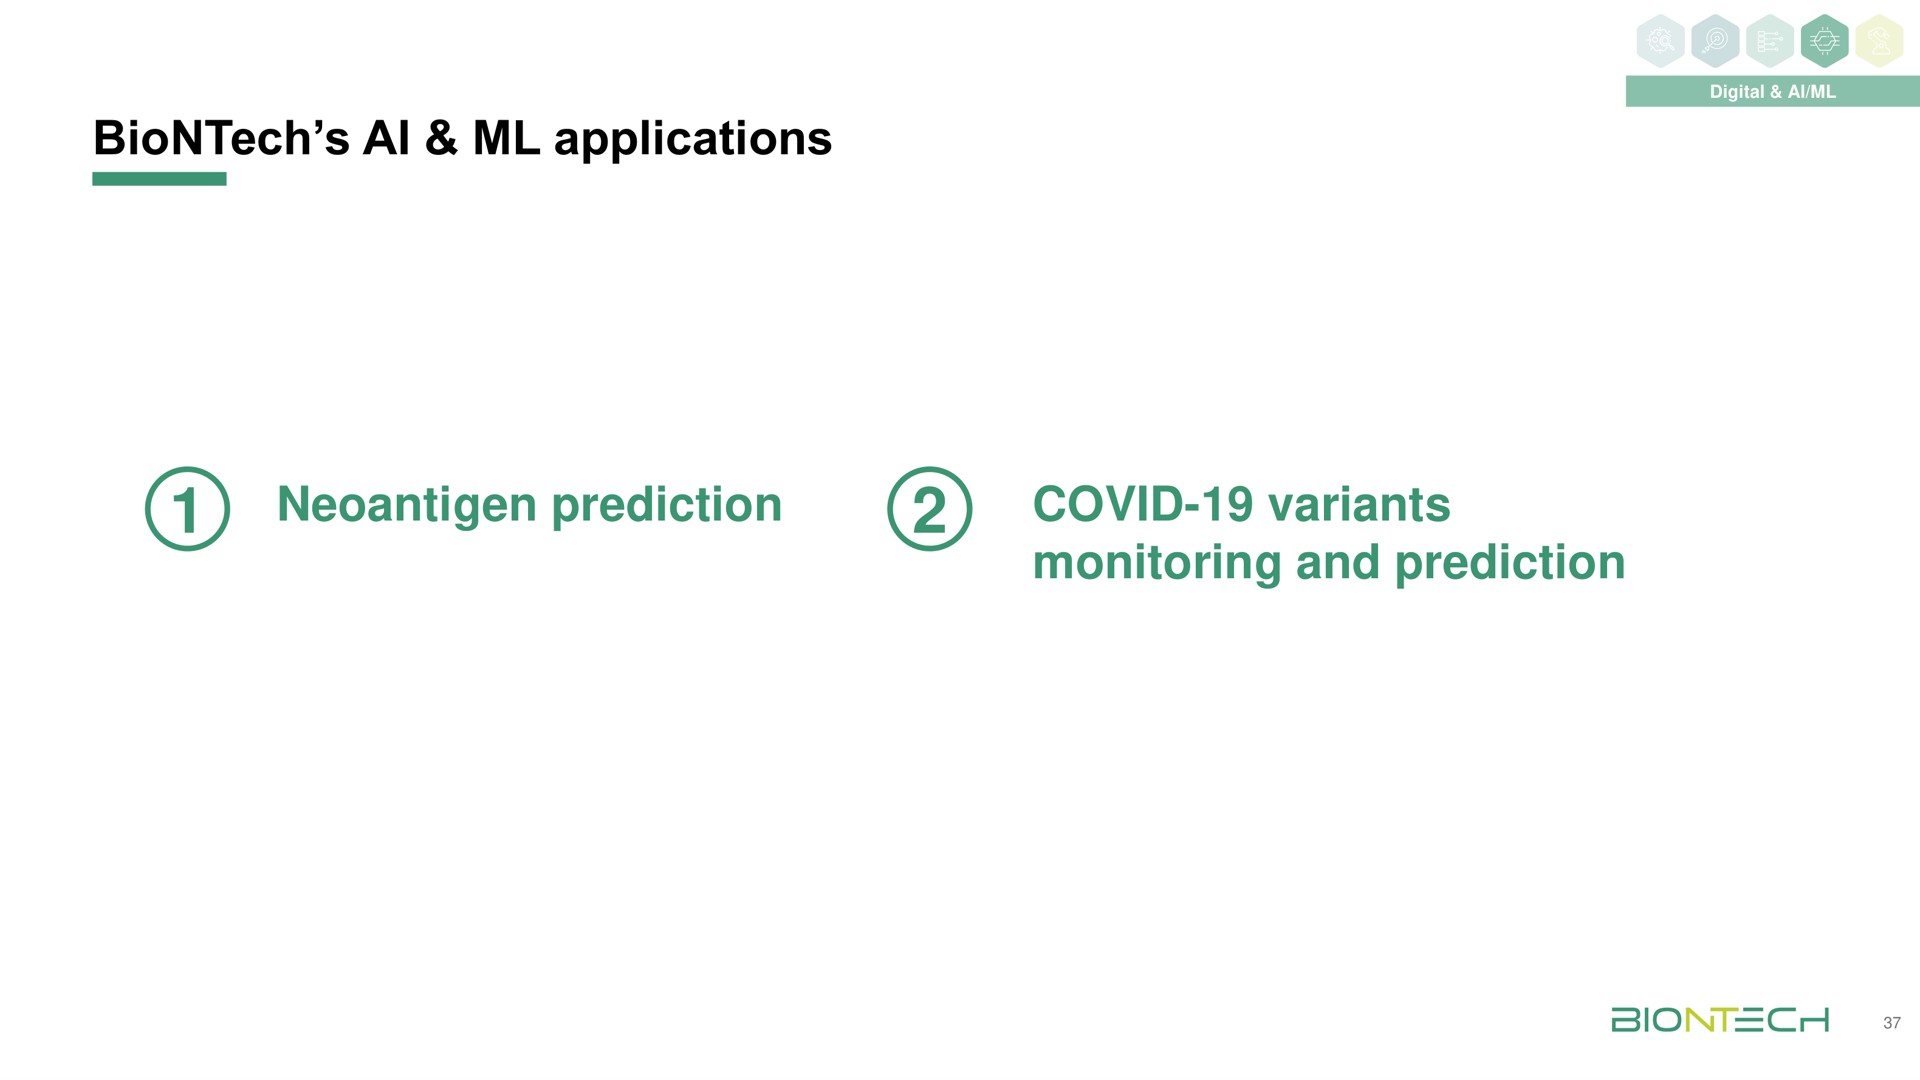 applications prediction covid variants monitoring and prediction | BioNTech